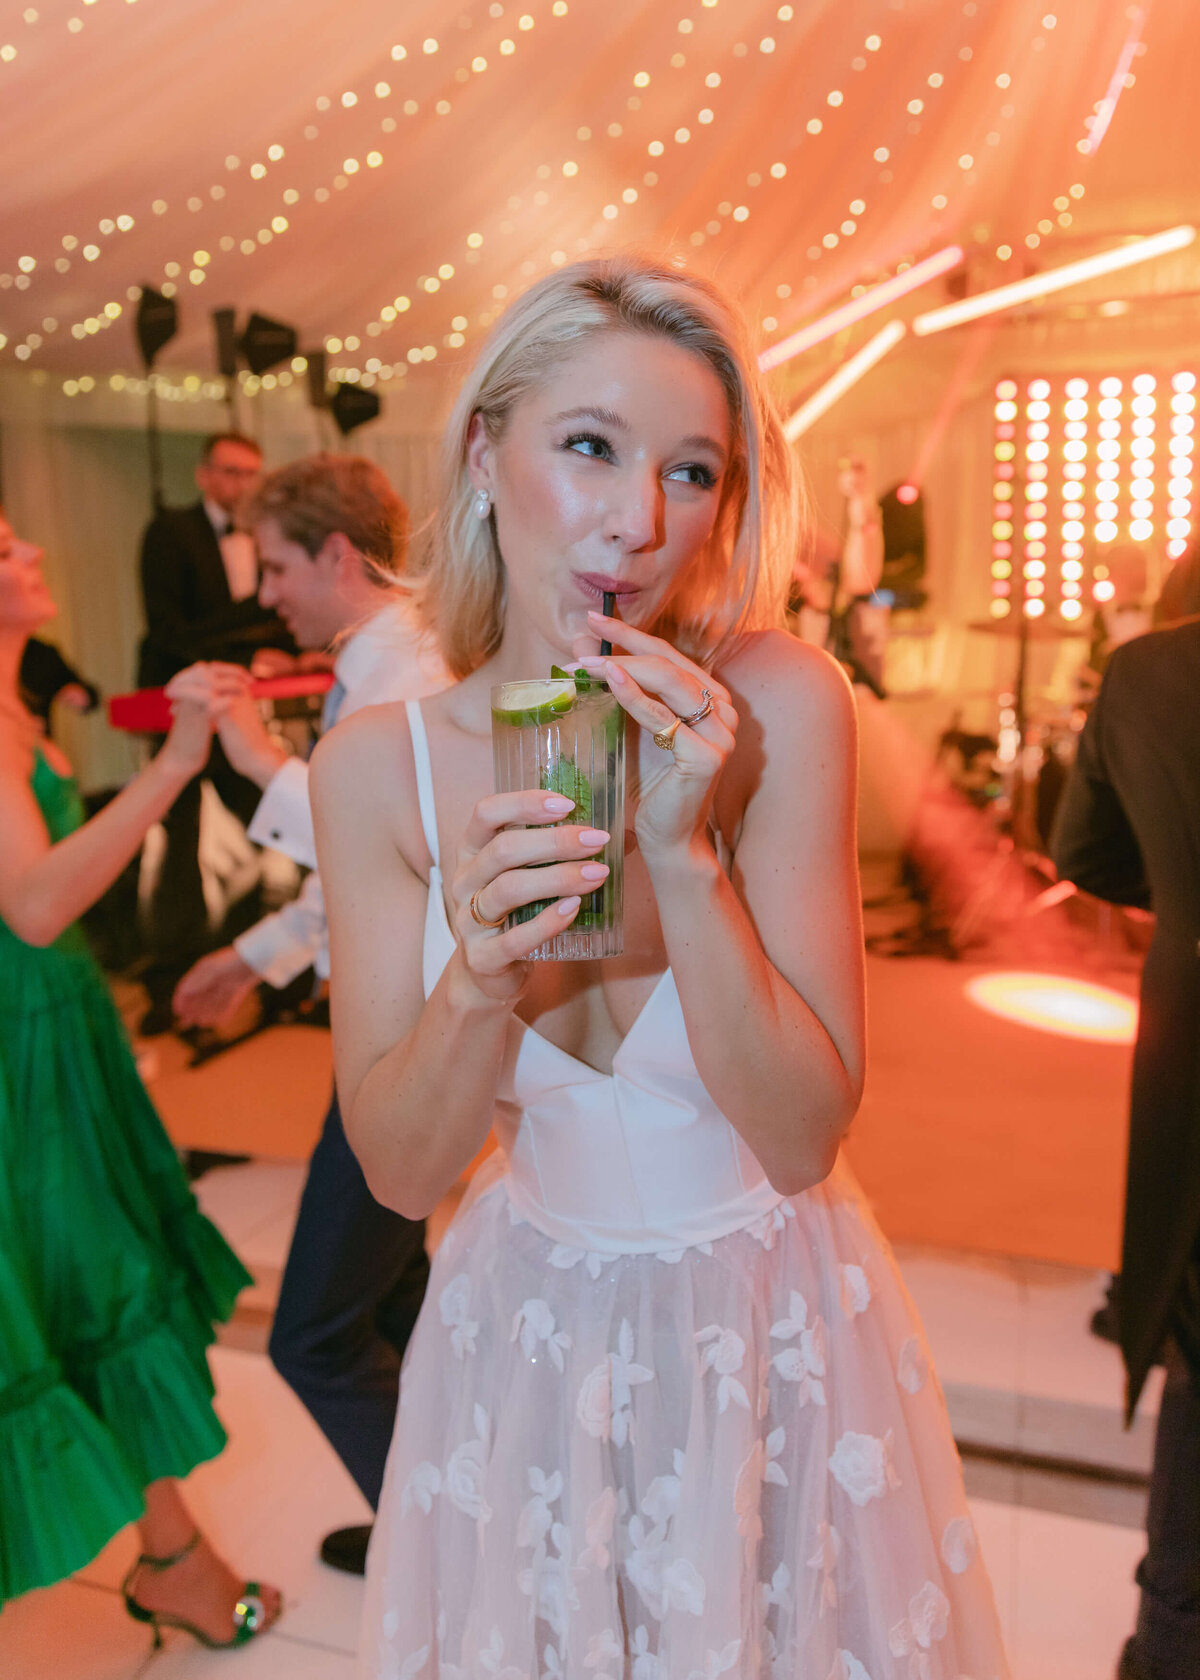 chloe-winstanley-weddings-wedding-club-dress-bride-cocktail